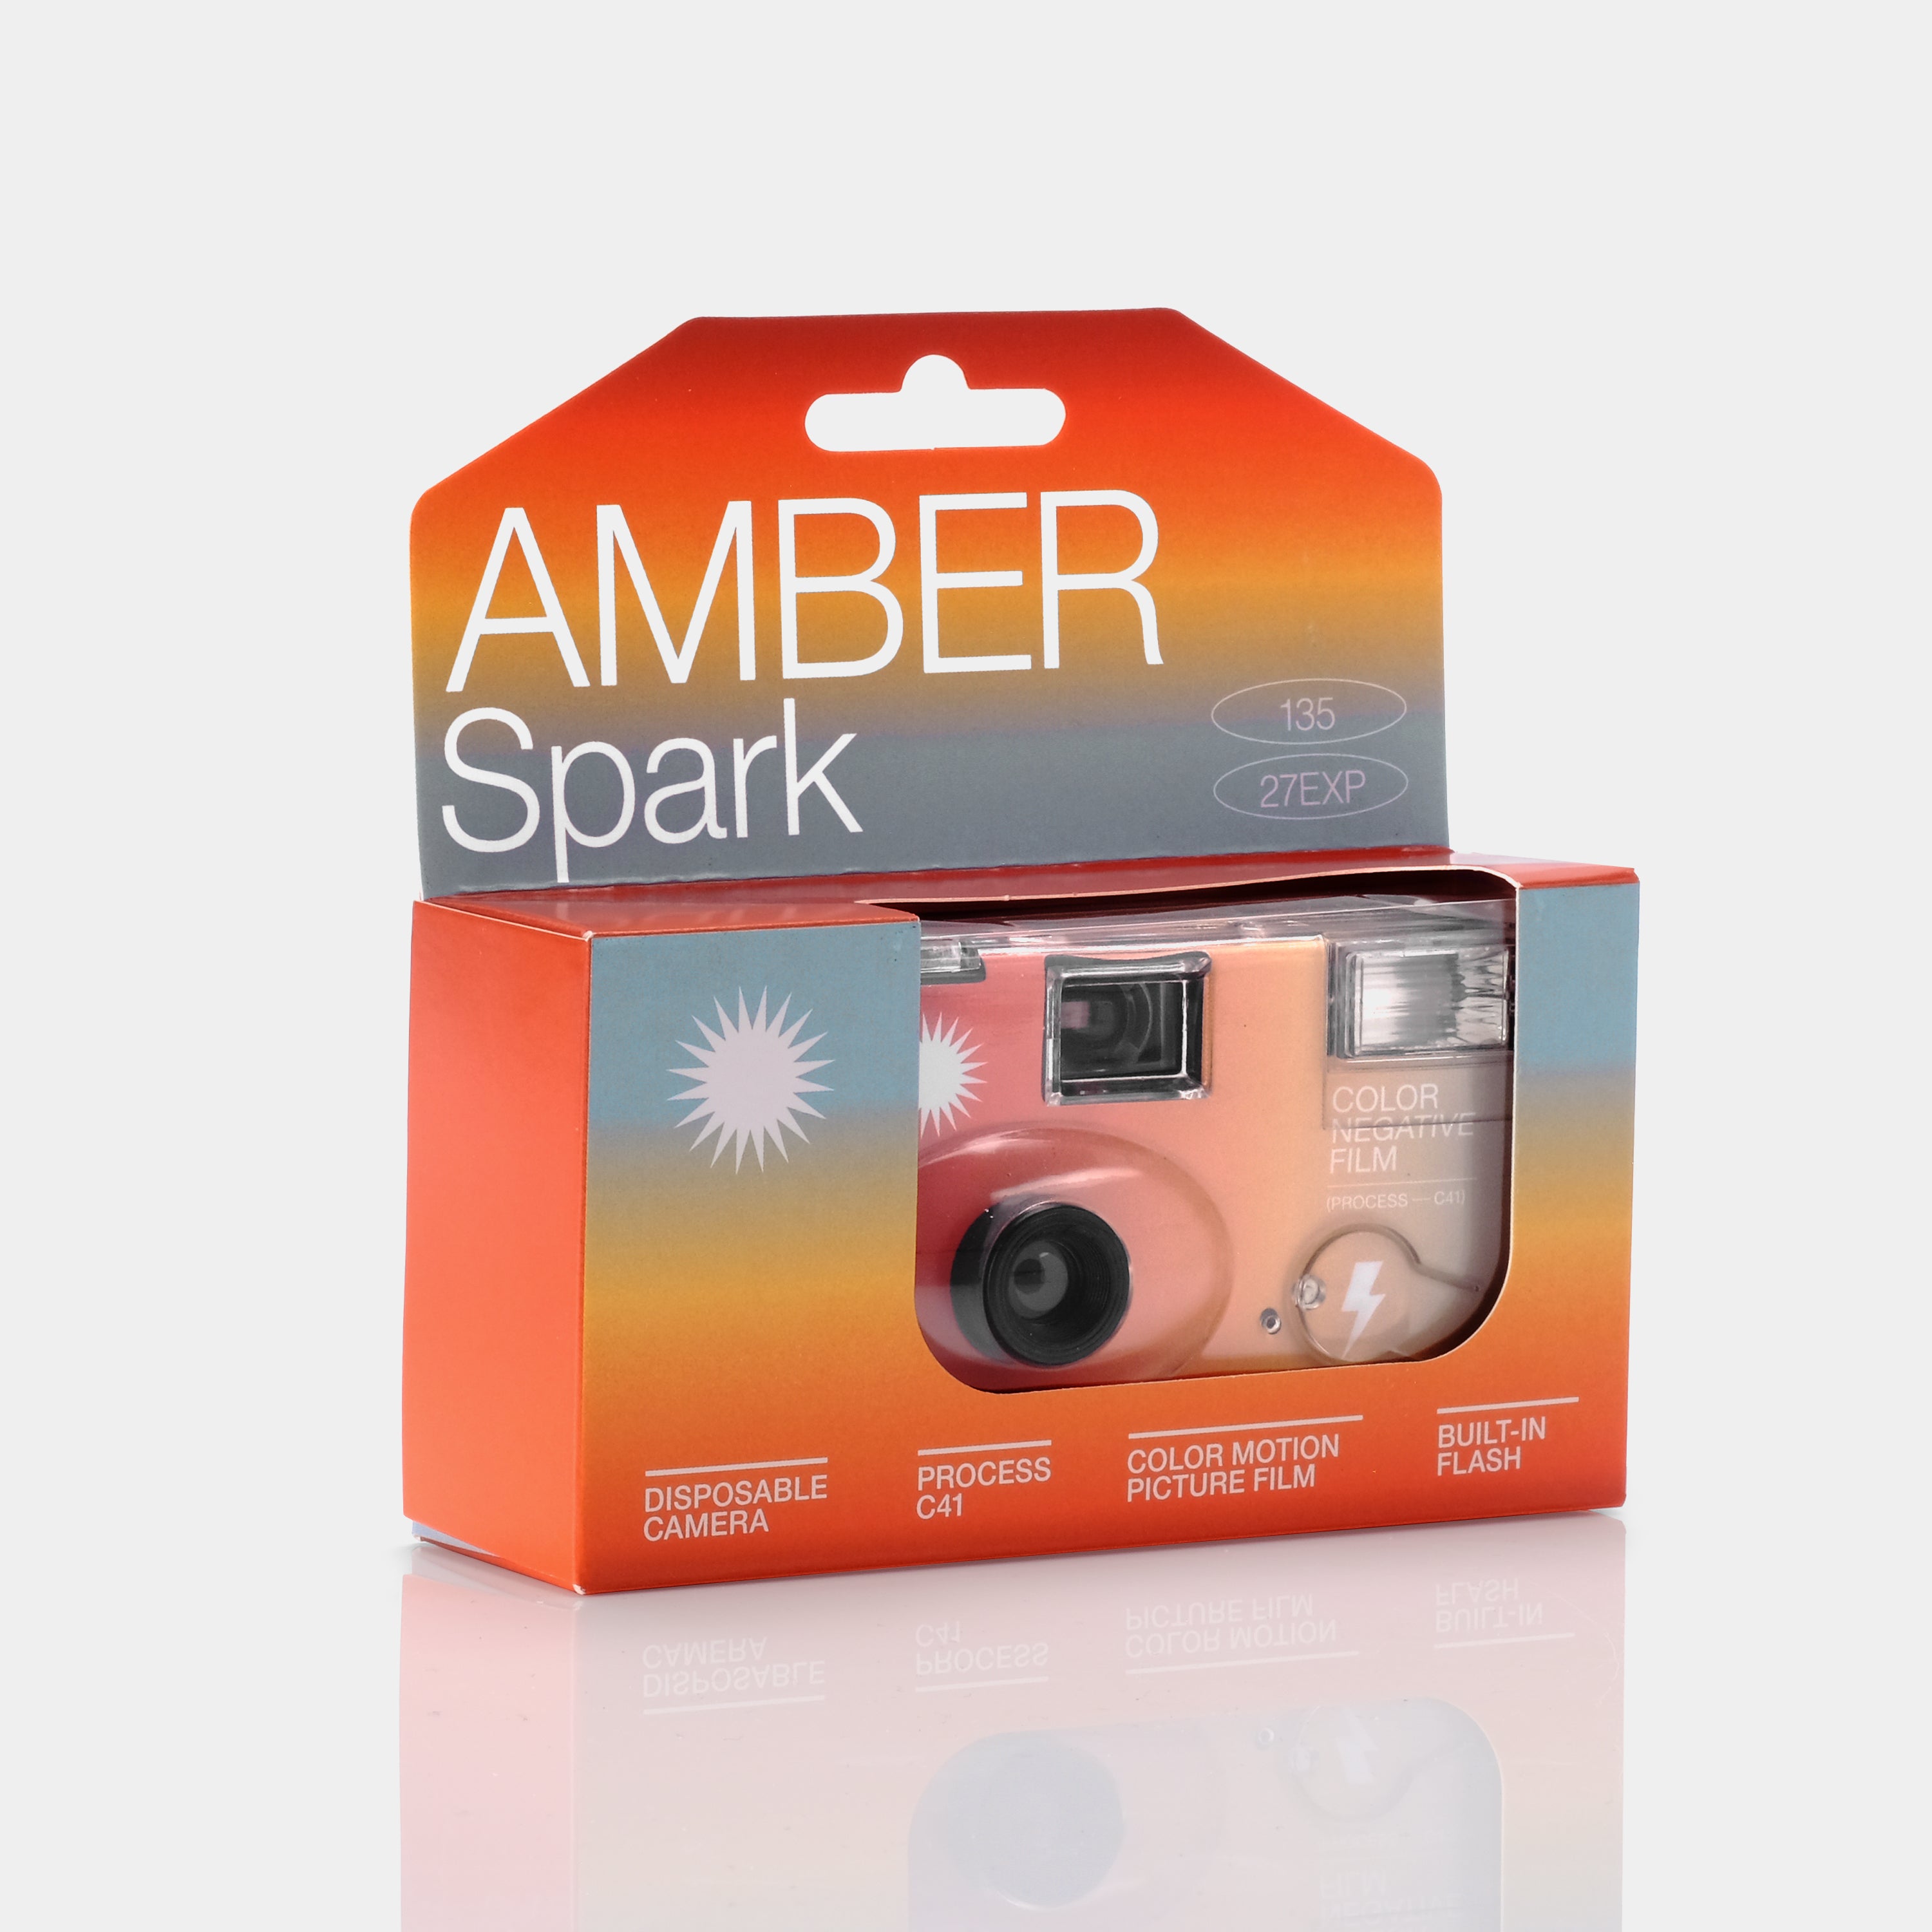 Amber Spark Disposable 35mm Film Camera (27 Exposures)